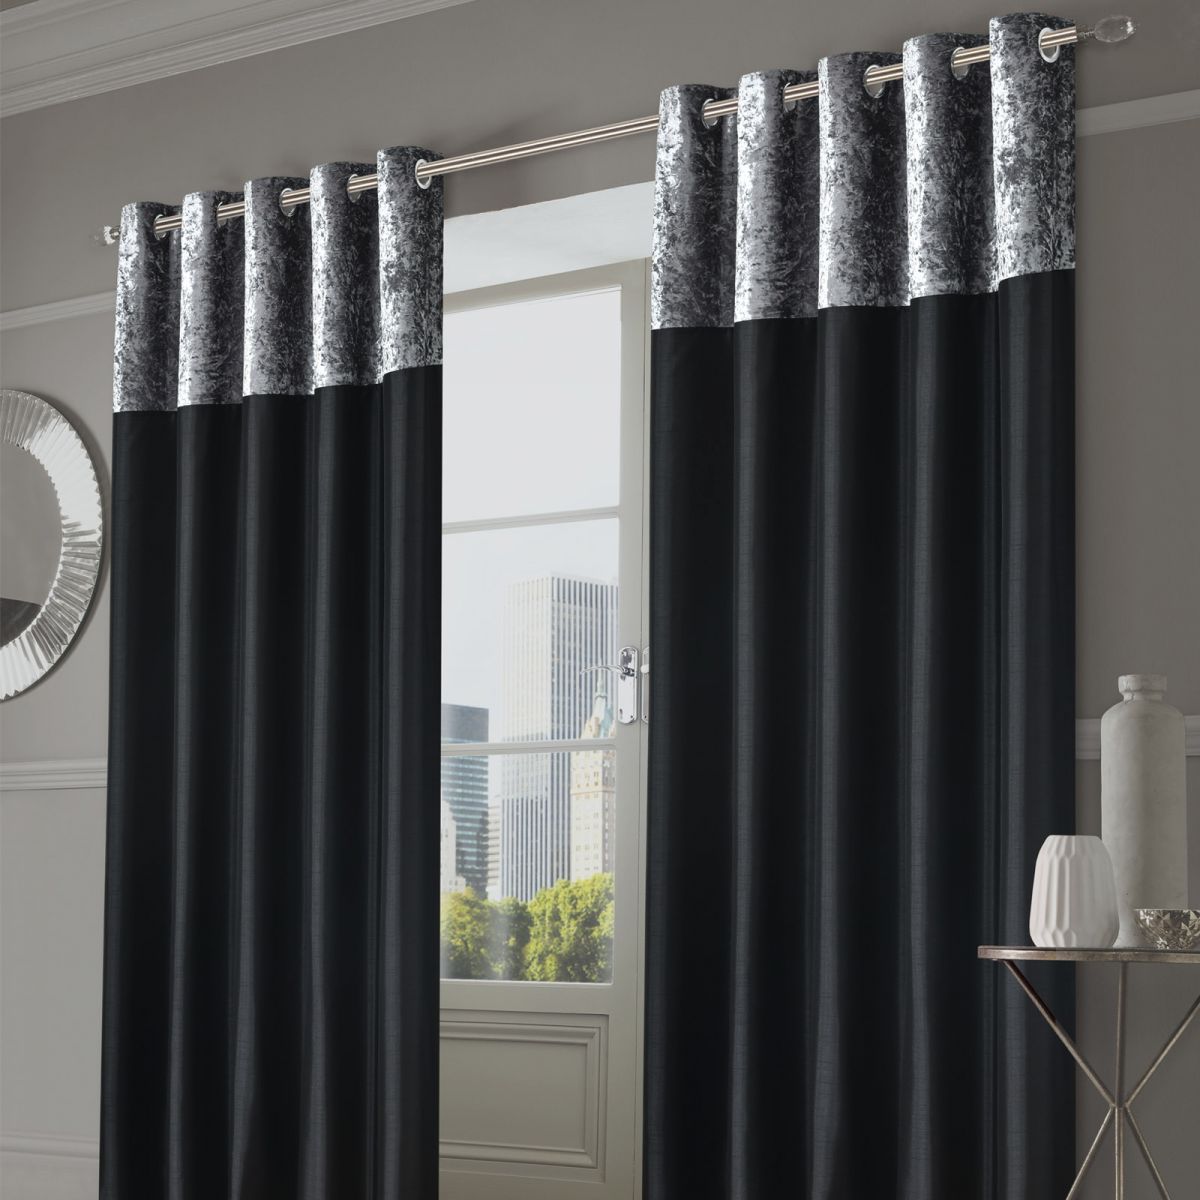 Sienna Home Manhattan Crushed Velvet Band Eyelet Curtains - Black, 90" x 72"